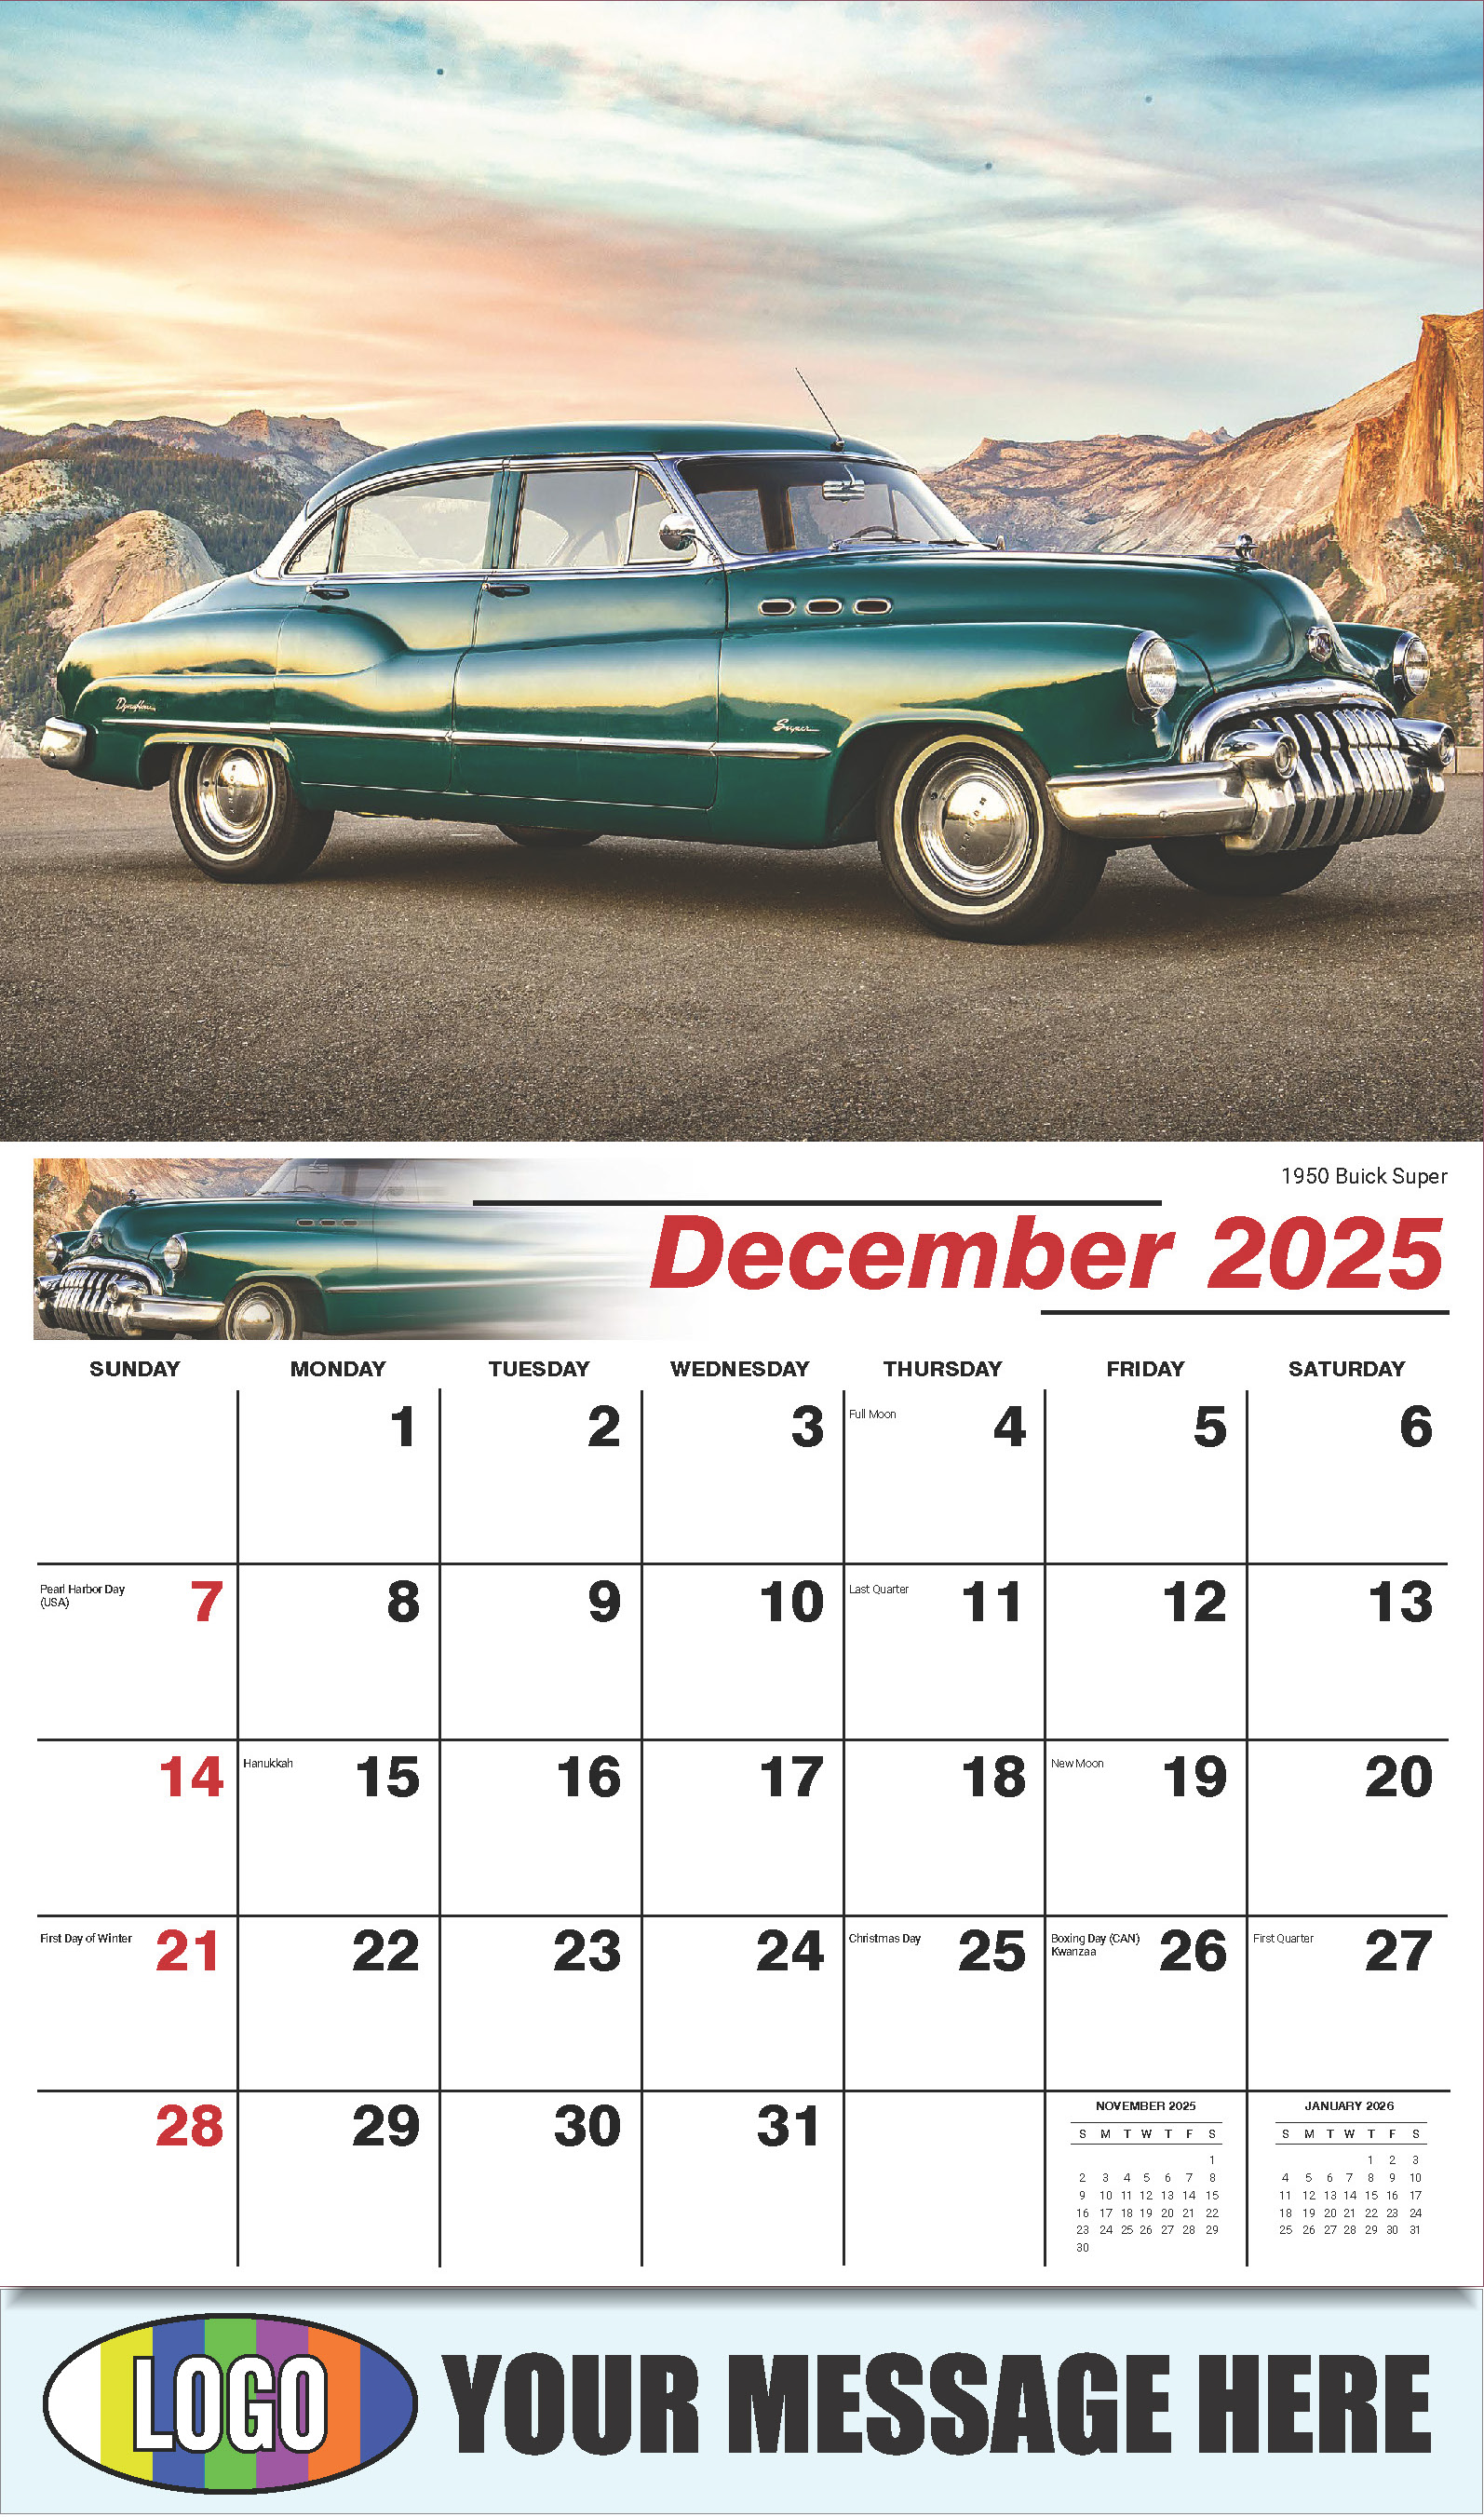 GM Classics 2025 Automotive Business Advertising Calendar - December